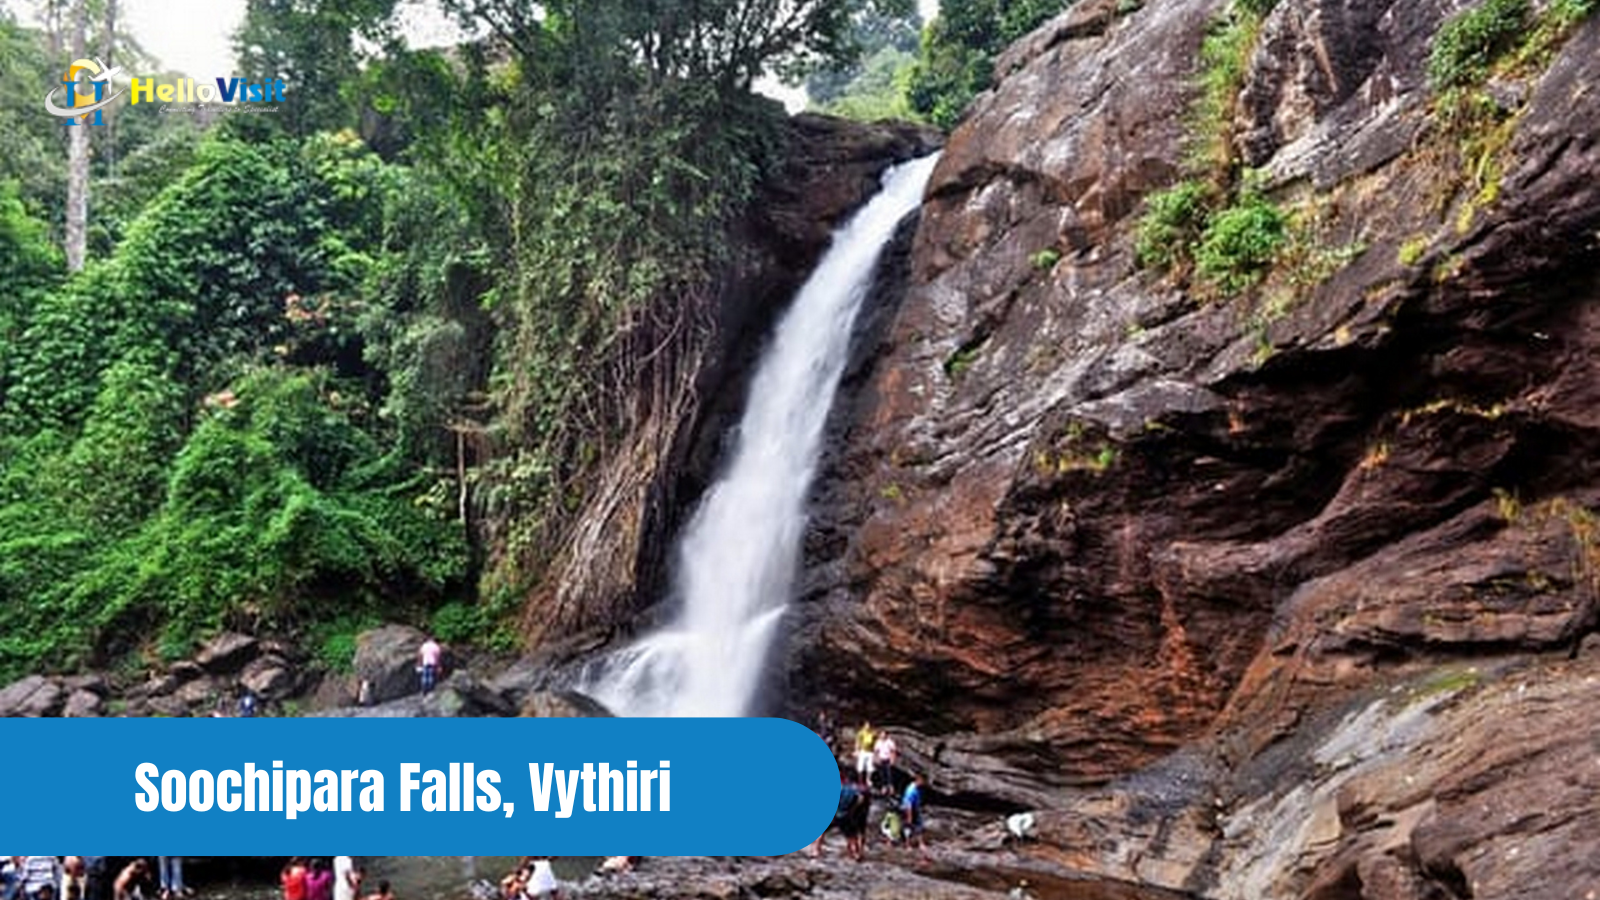 Soochipara Falls, Vythiri